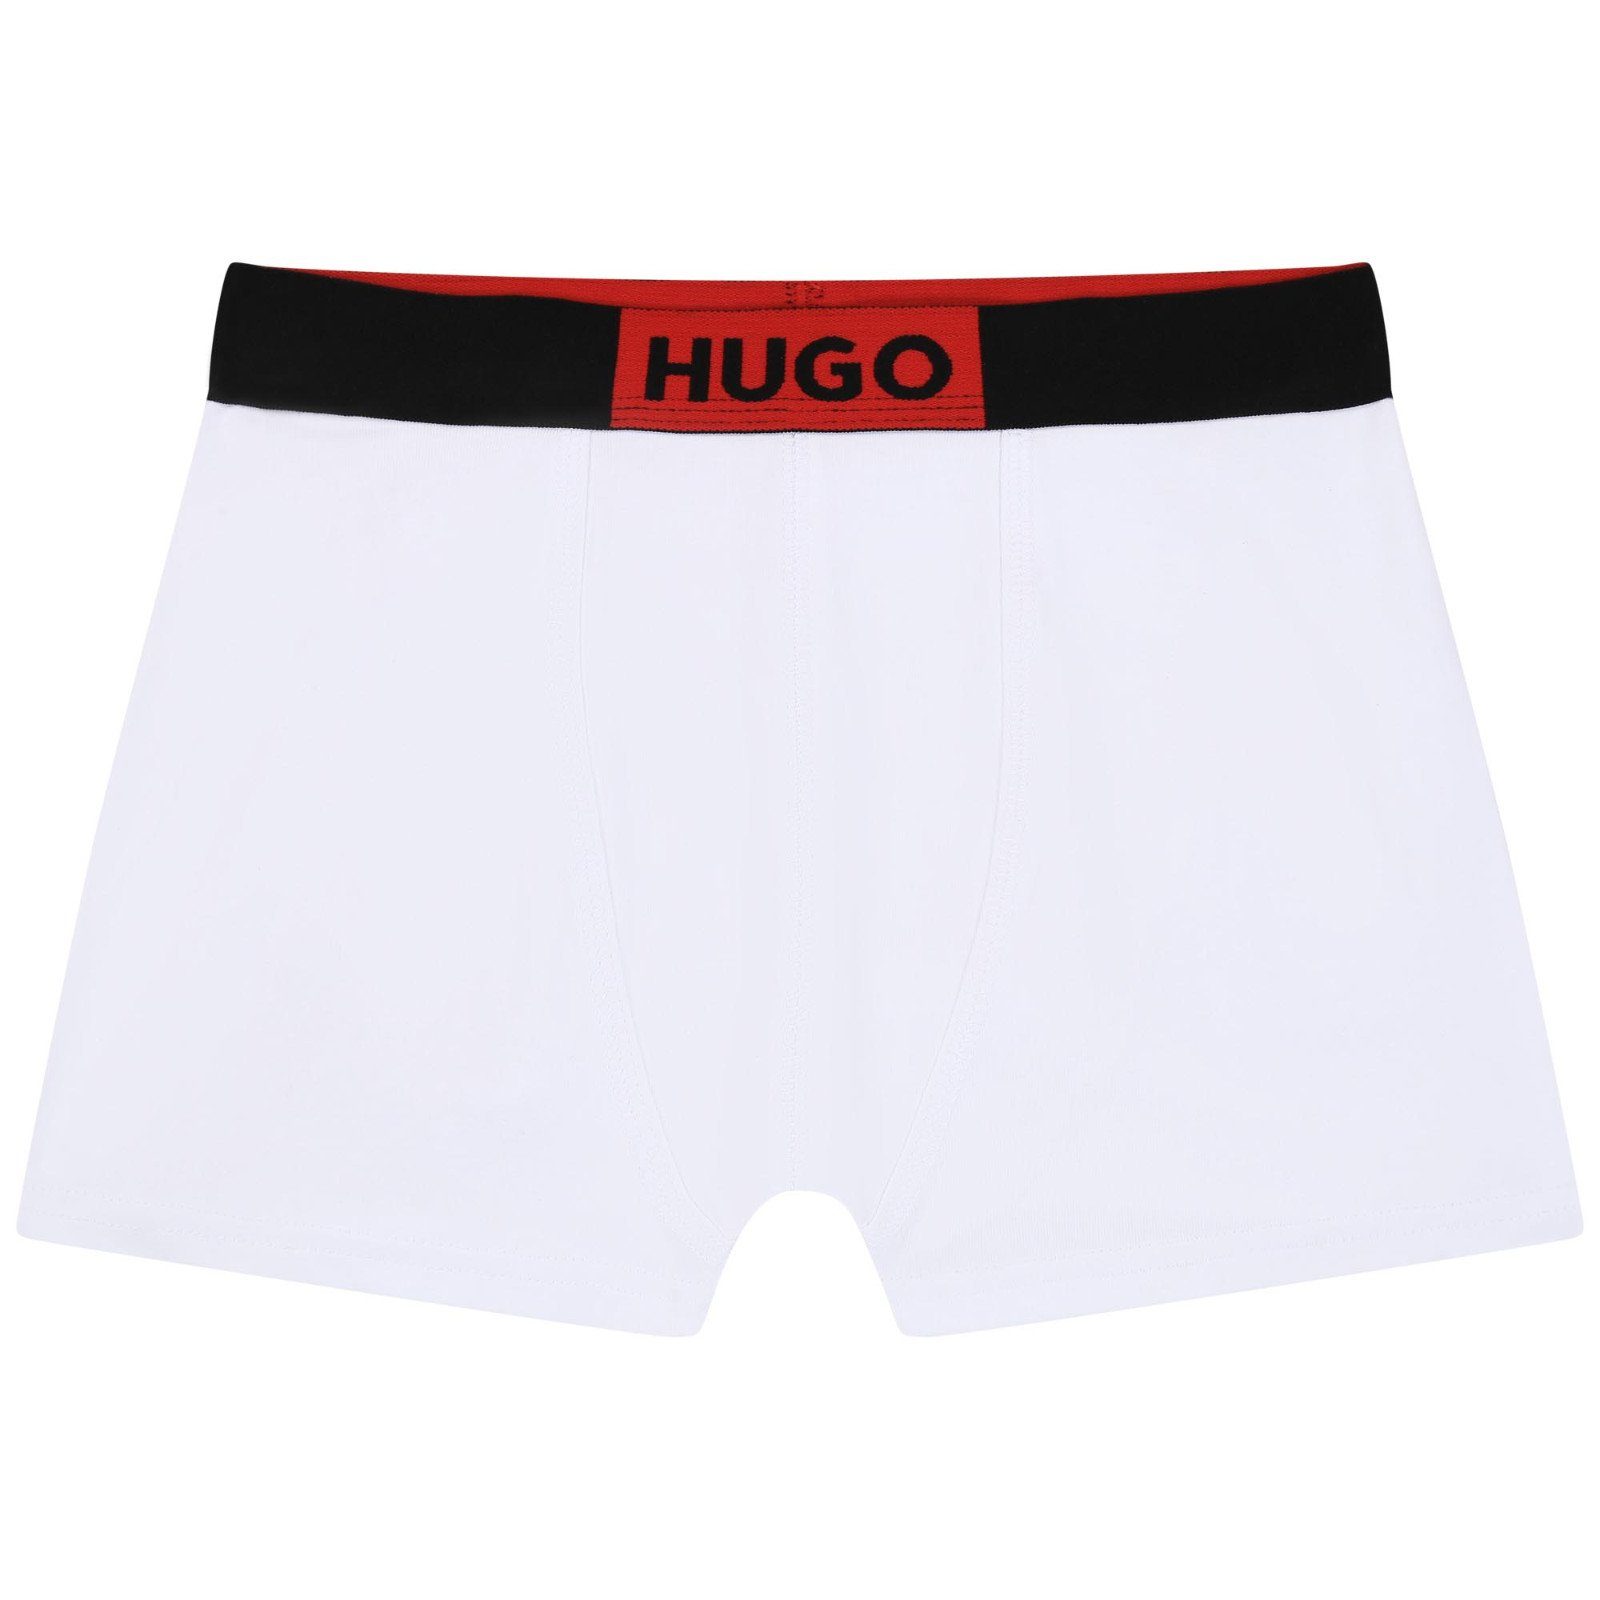 HUGO schwarz Boxershorts Set Trunks weiß 2er Logo HUGO mit Boxershorts